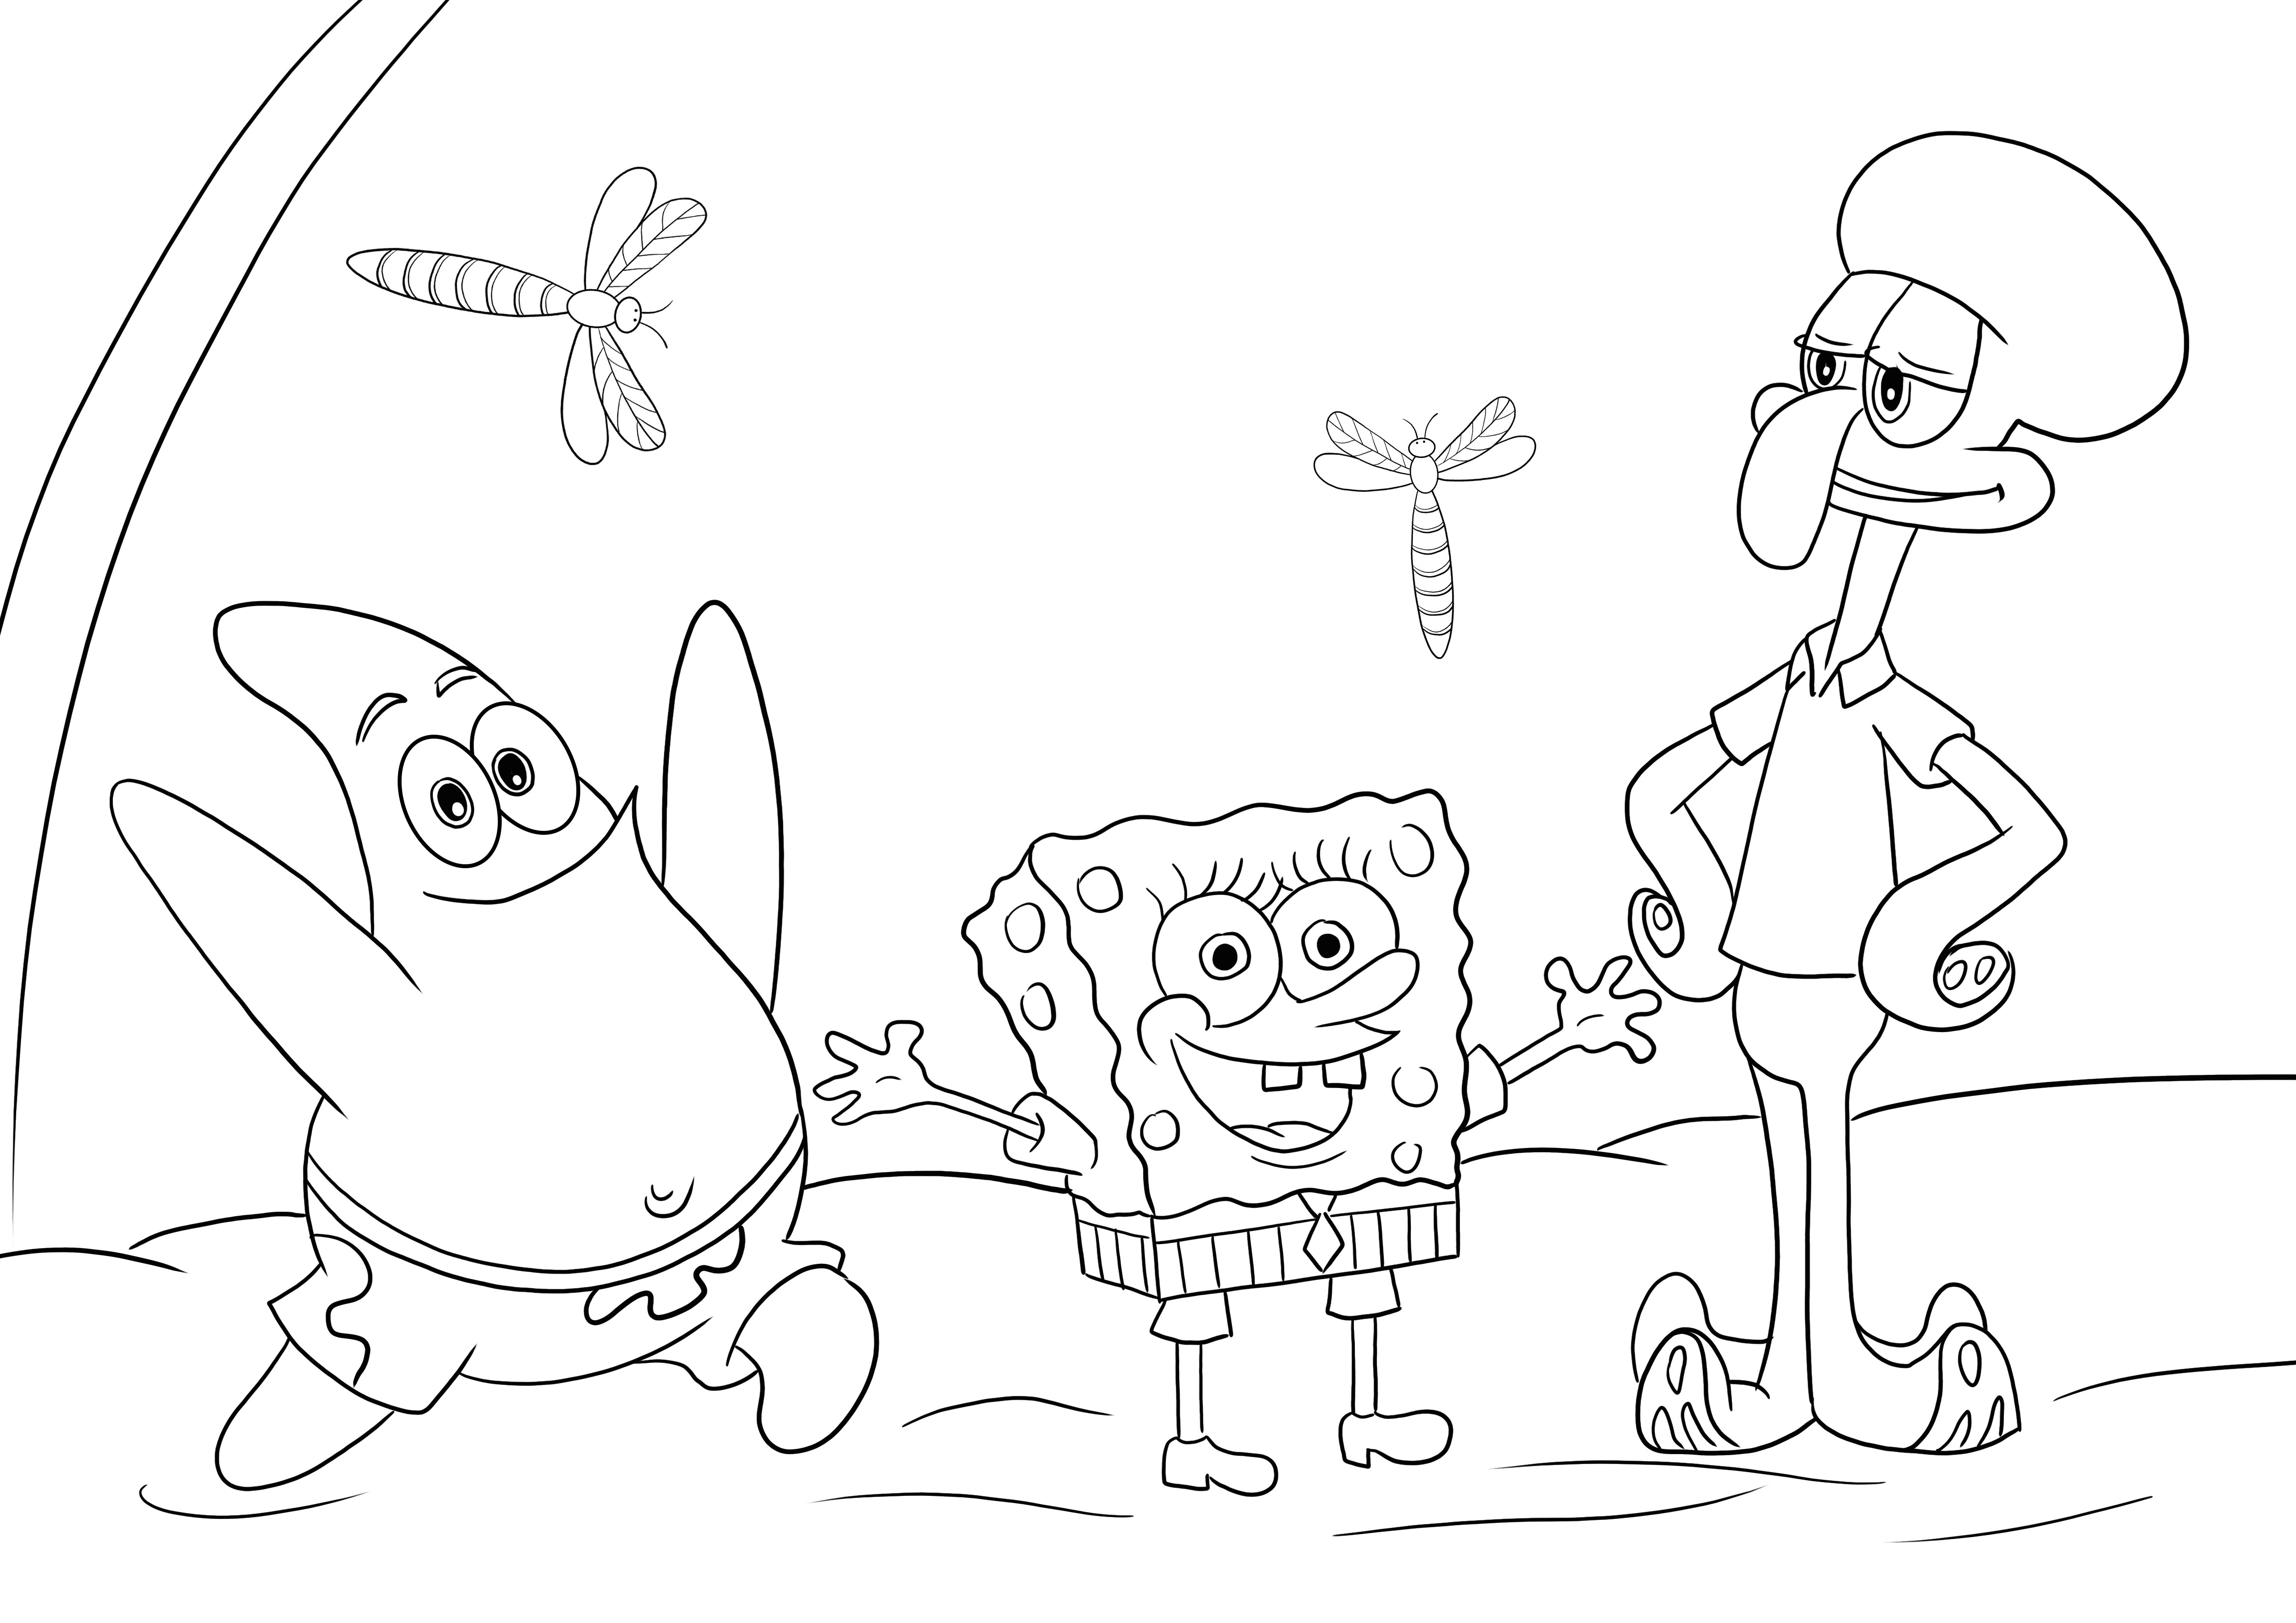 Sponge Bob-Patrick Star-Squidward para colorear e imprimir imagen gratis